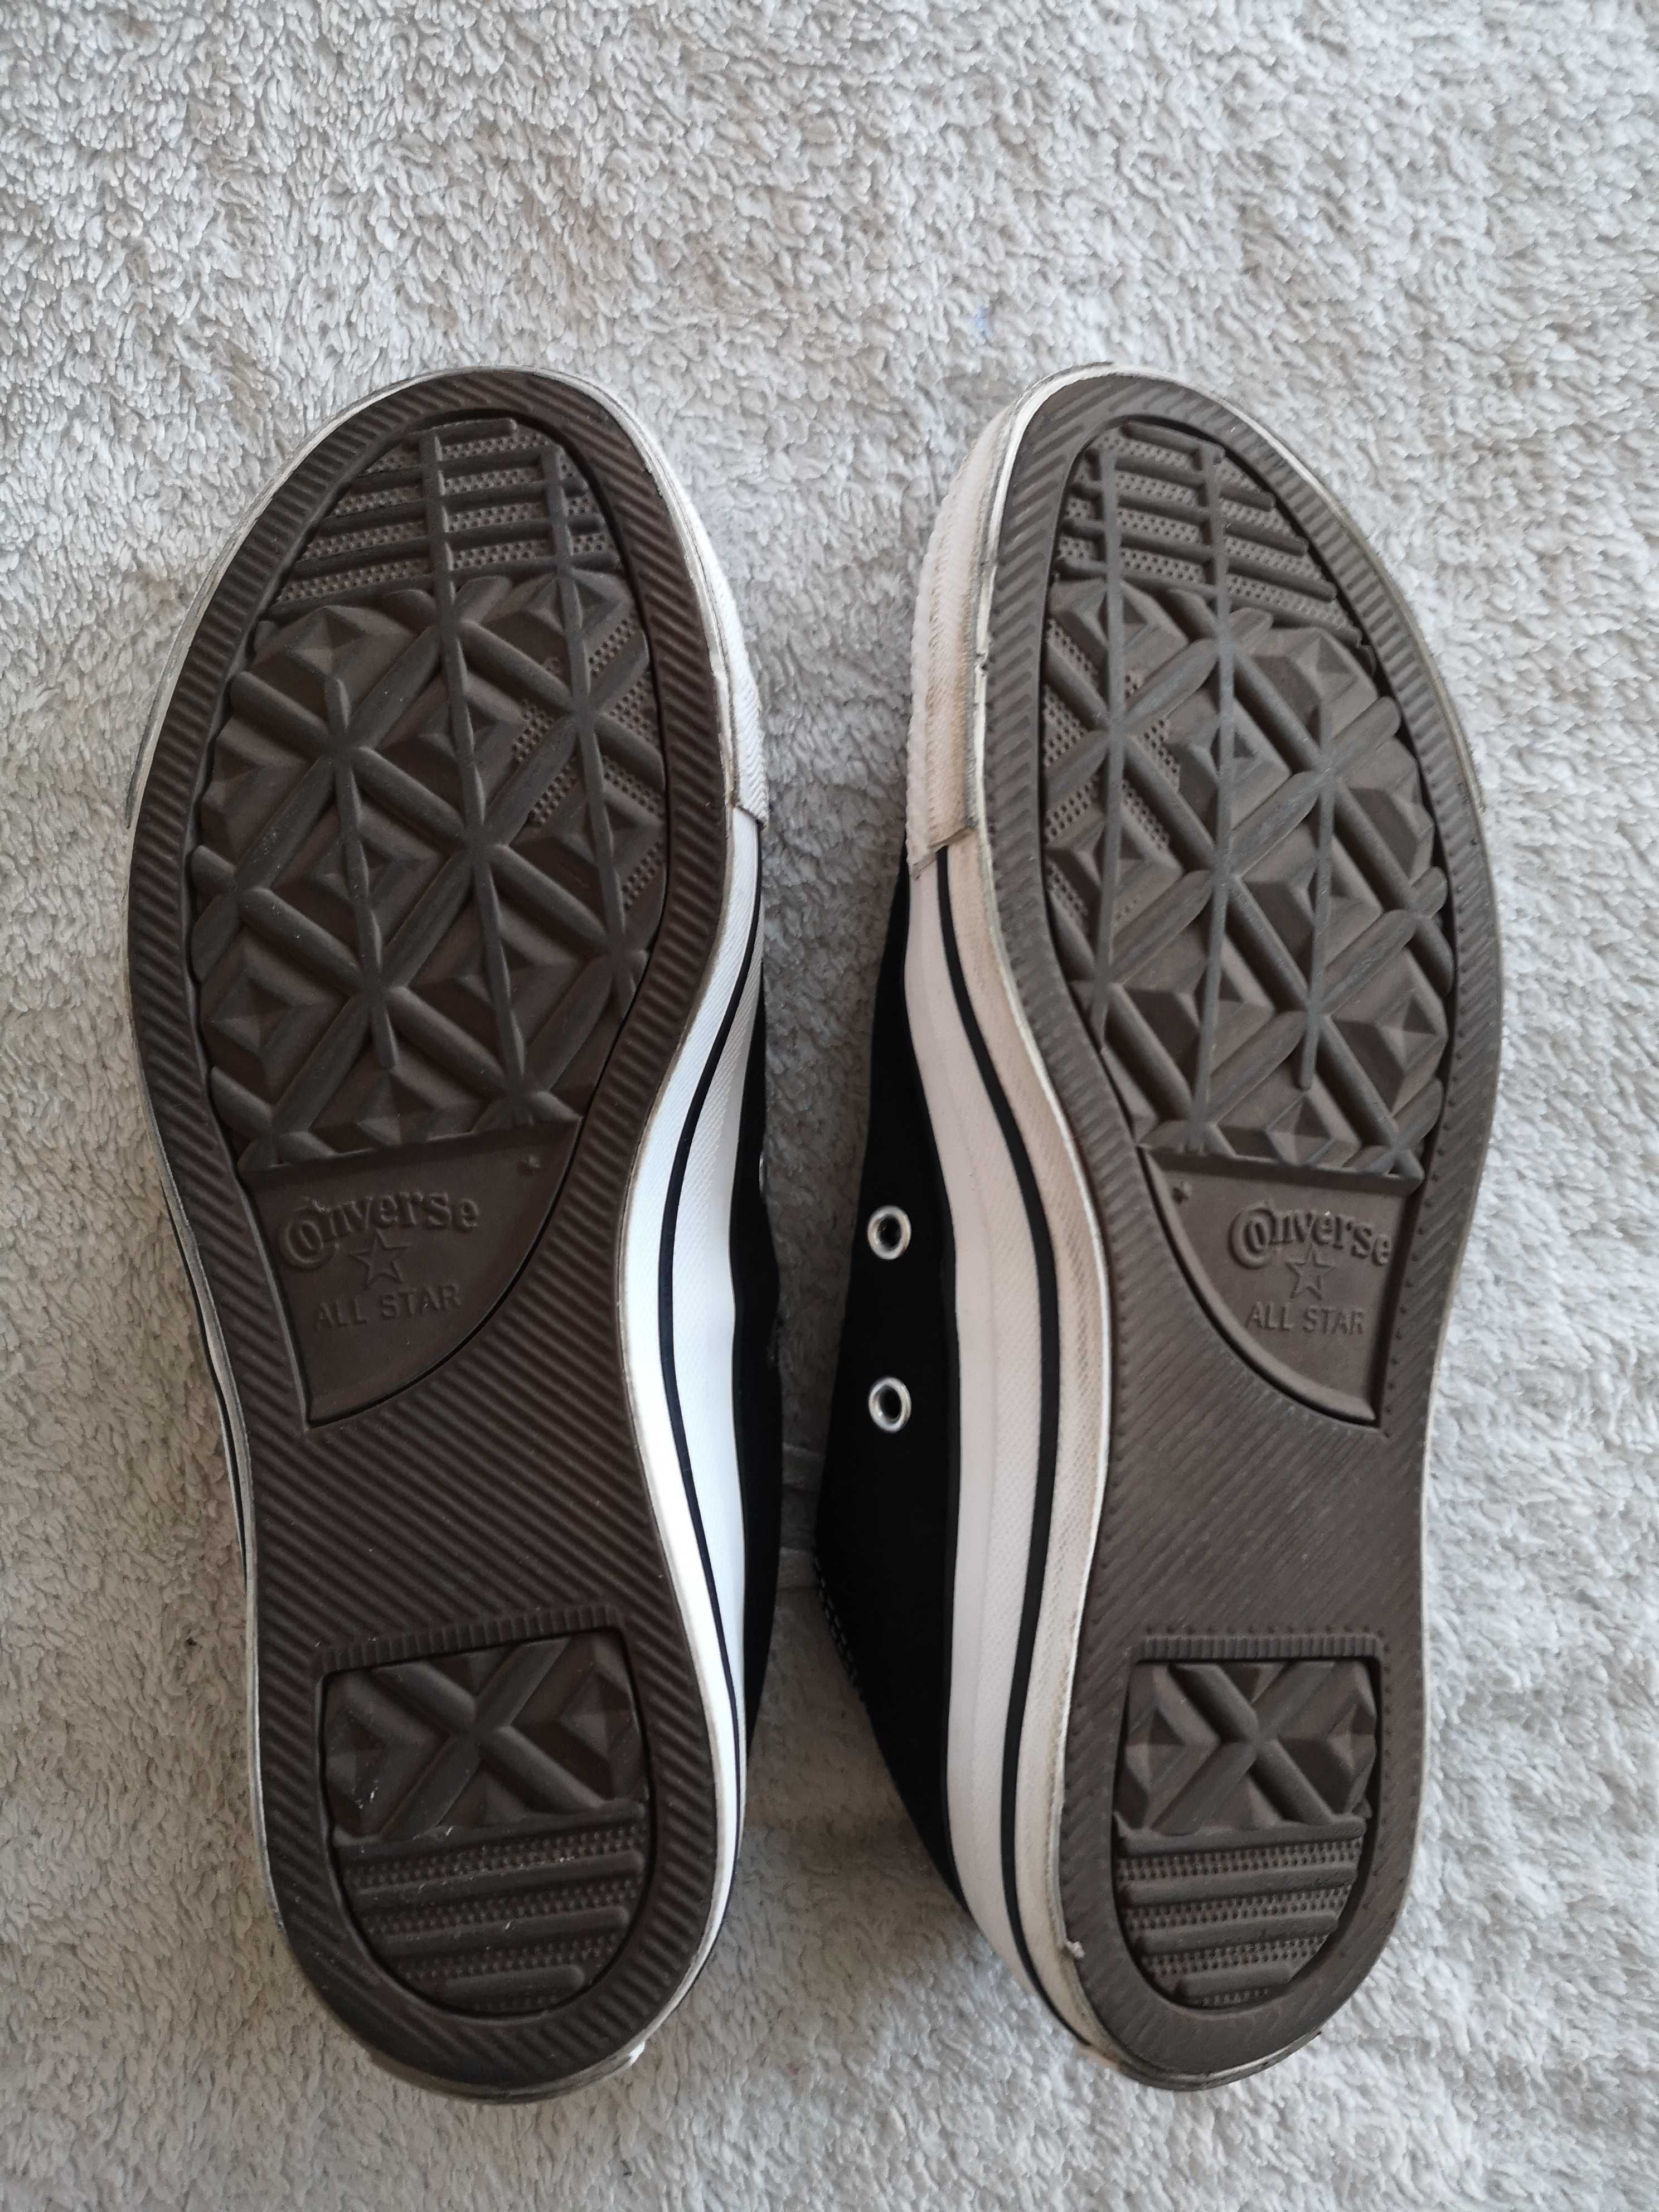 Czarne buty sportowe trampki tenisówki Converse M9166C 39 jak nowe